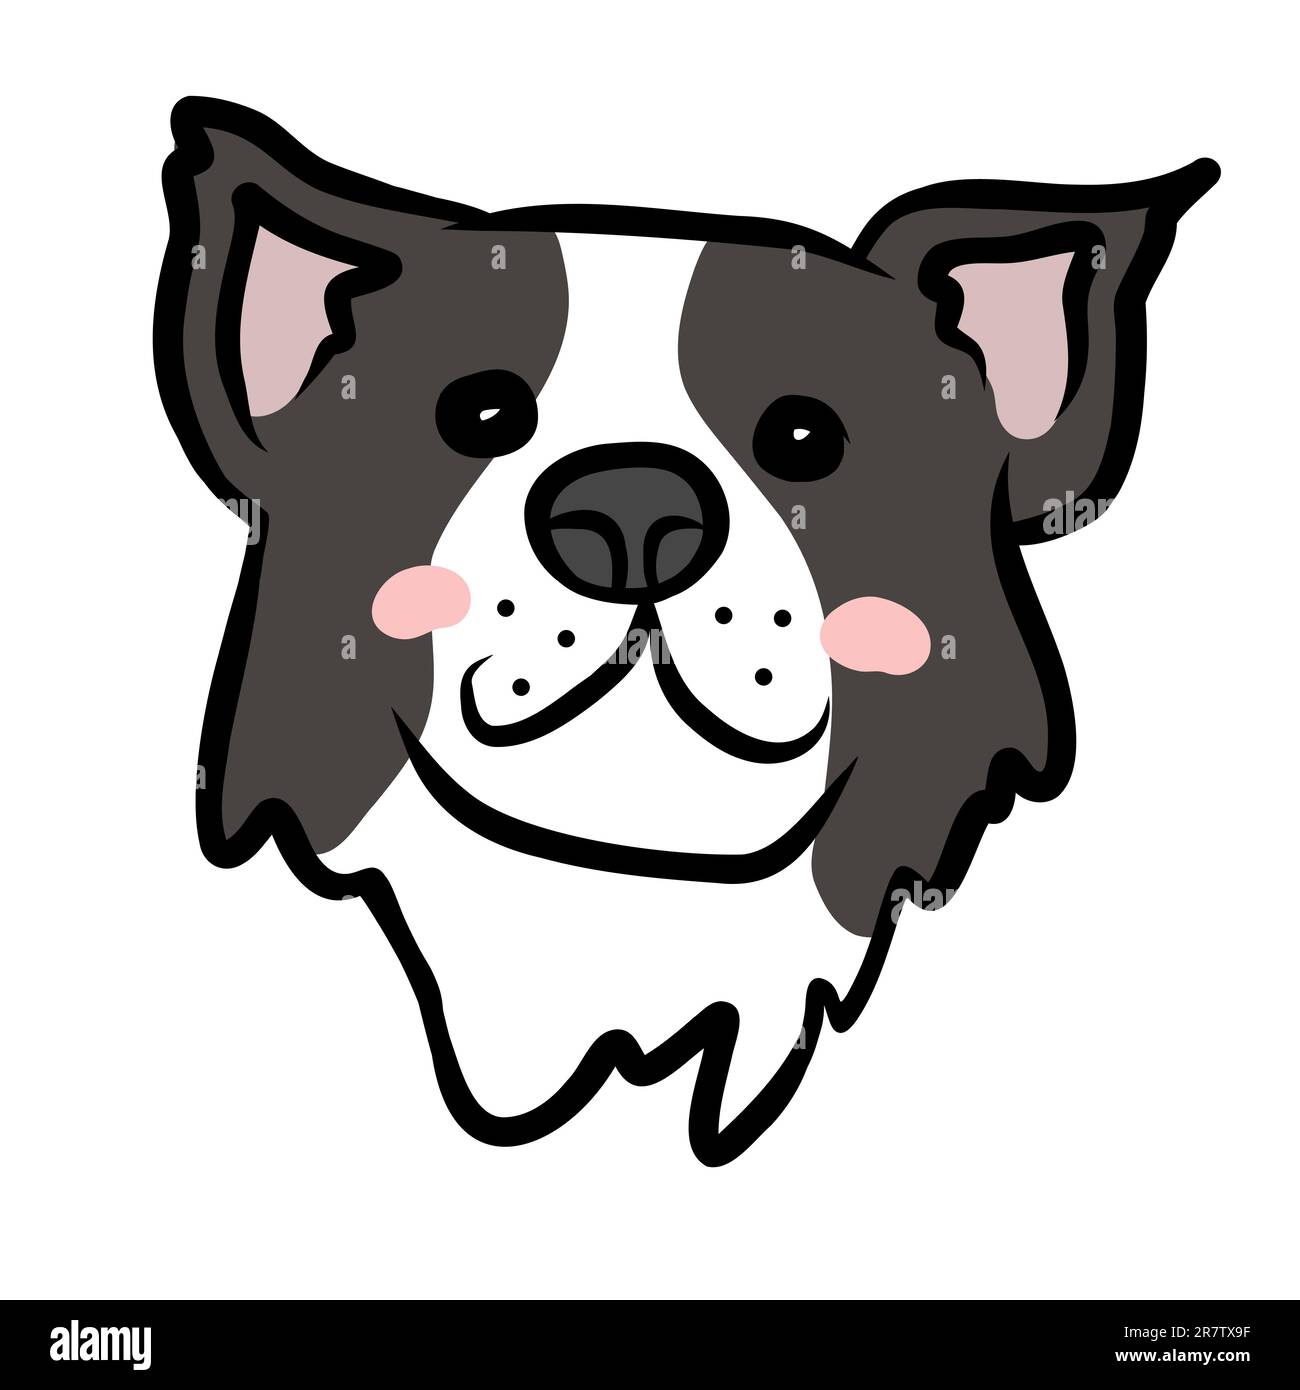 Border Collie dog cartoon vector illustration Stock Vector